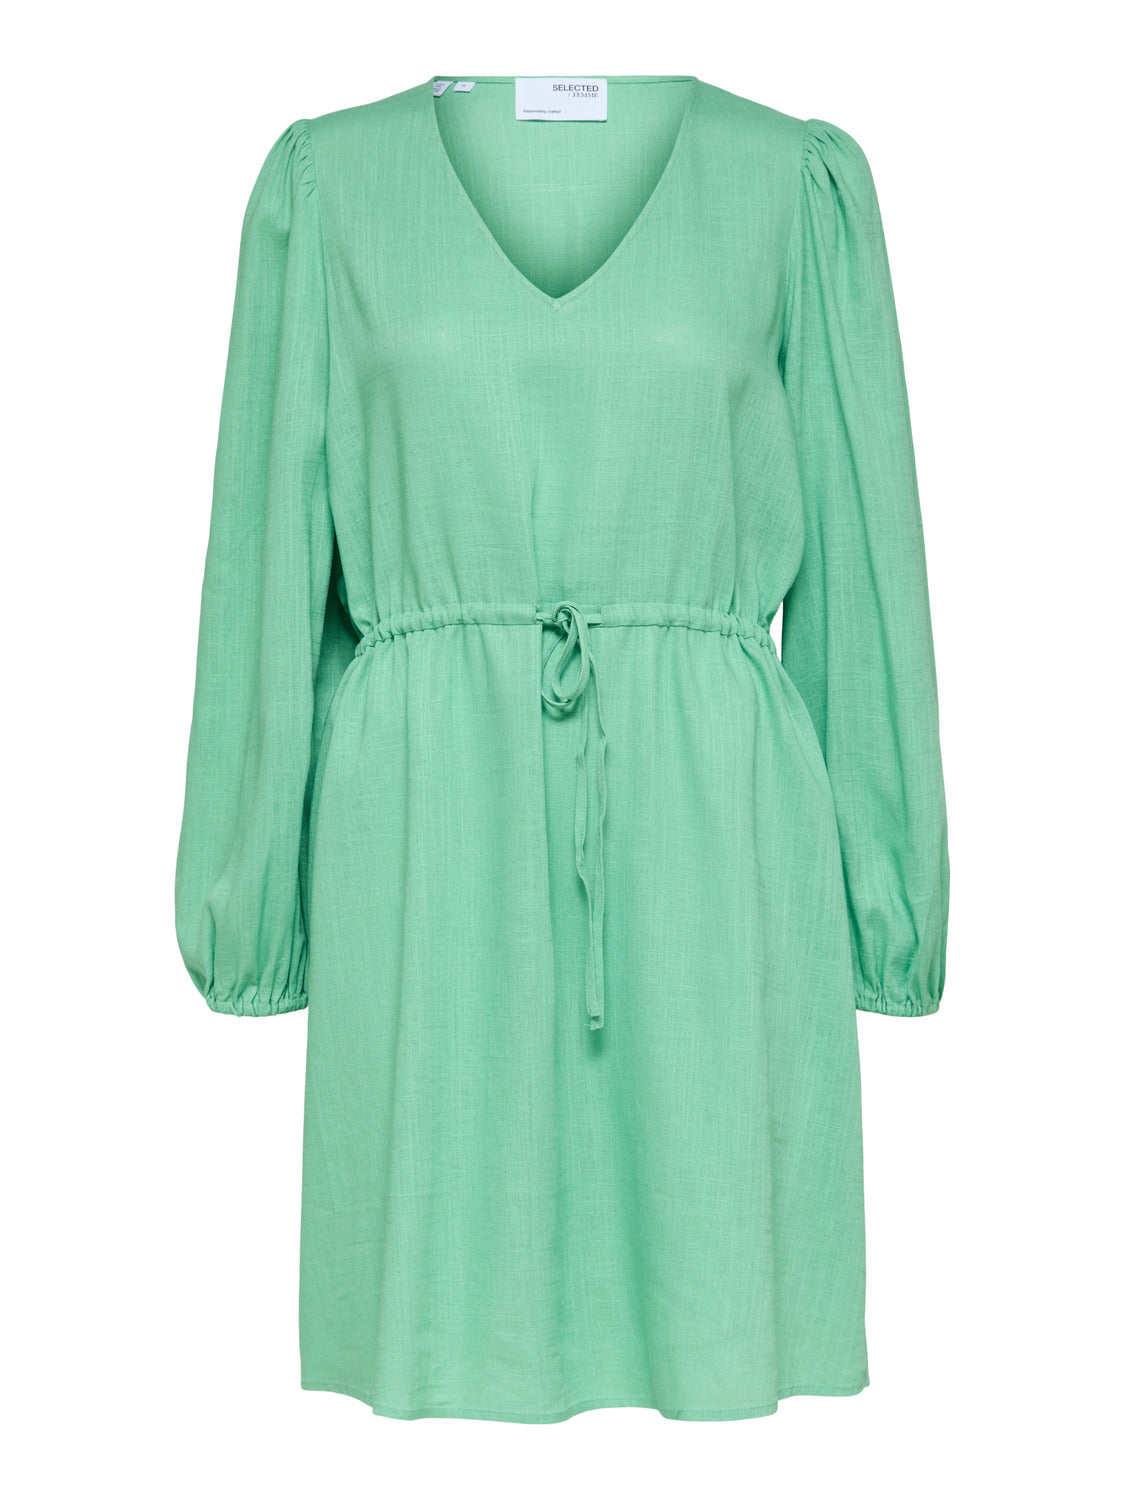 SLFVIVA Dress - Absinthe Green